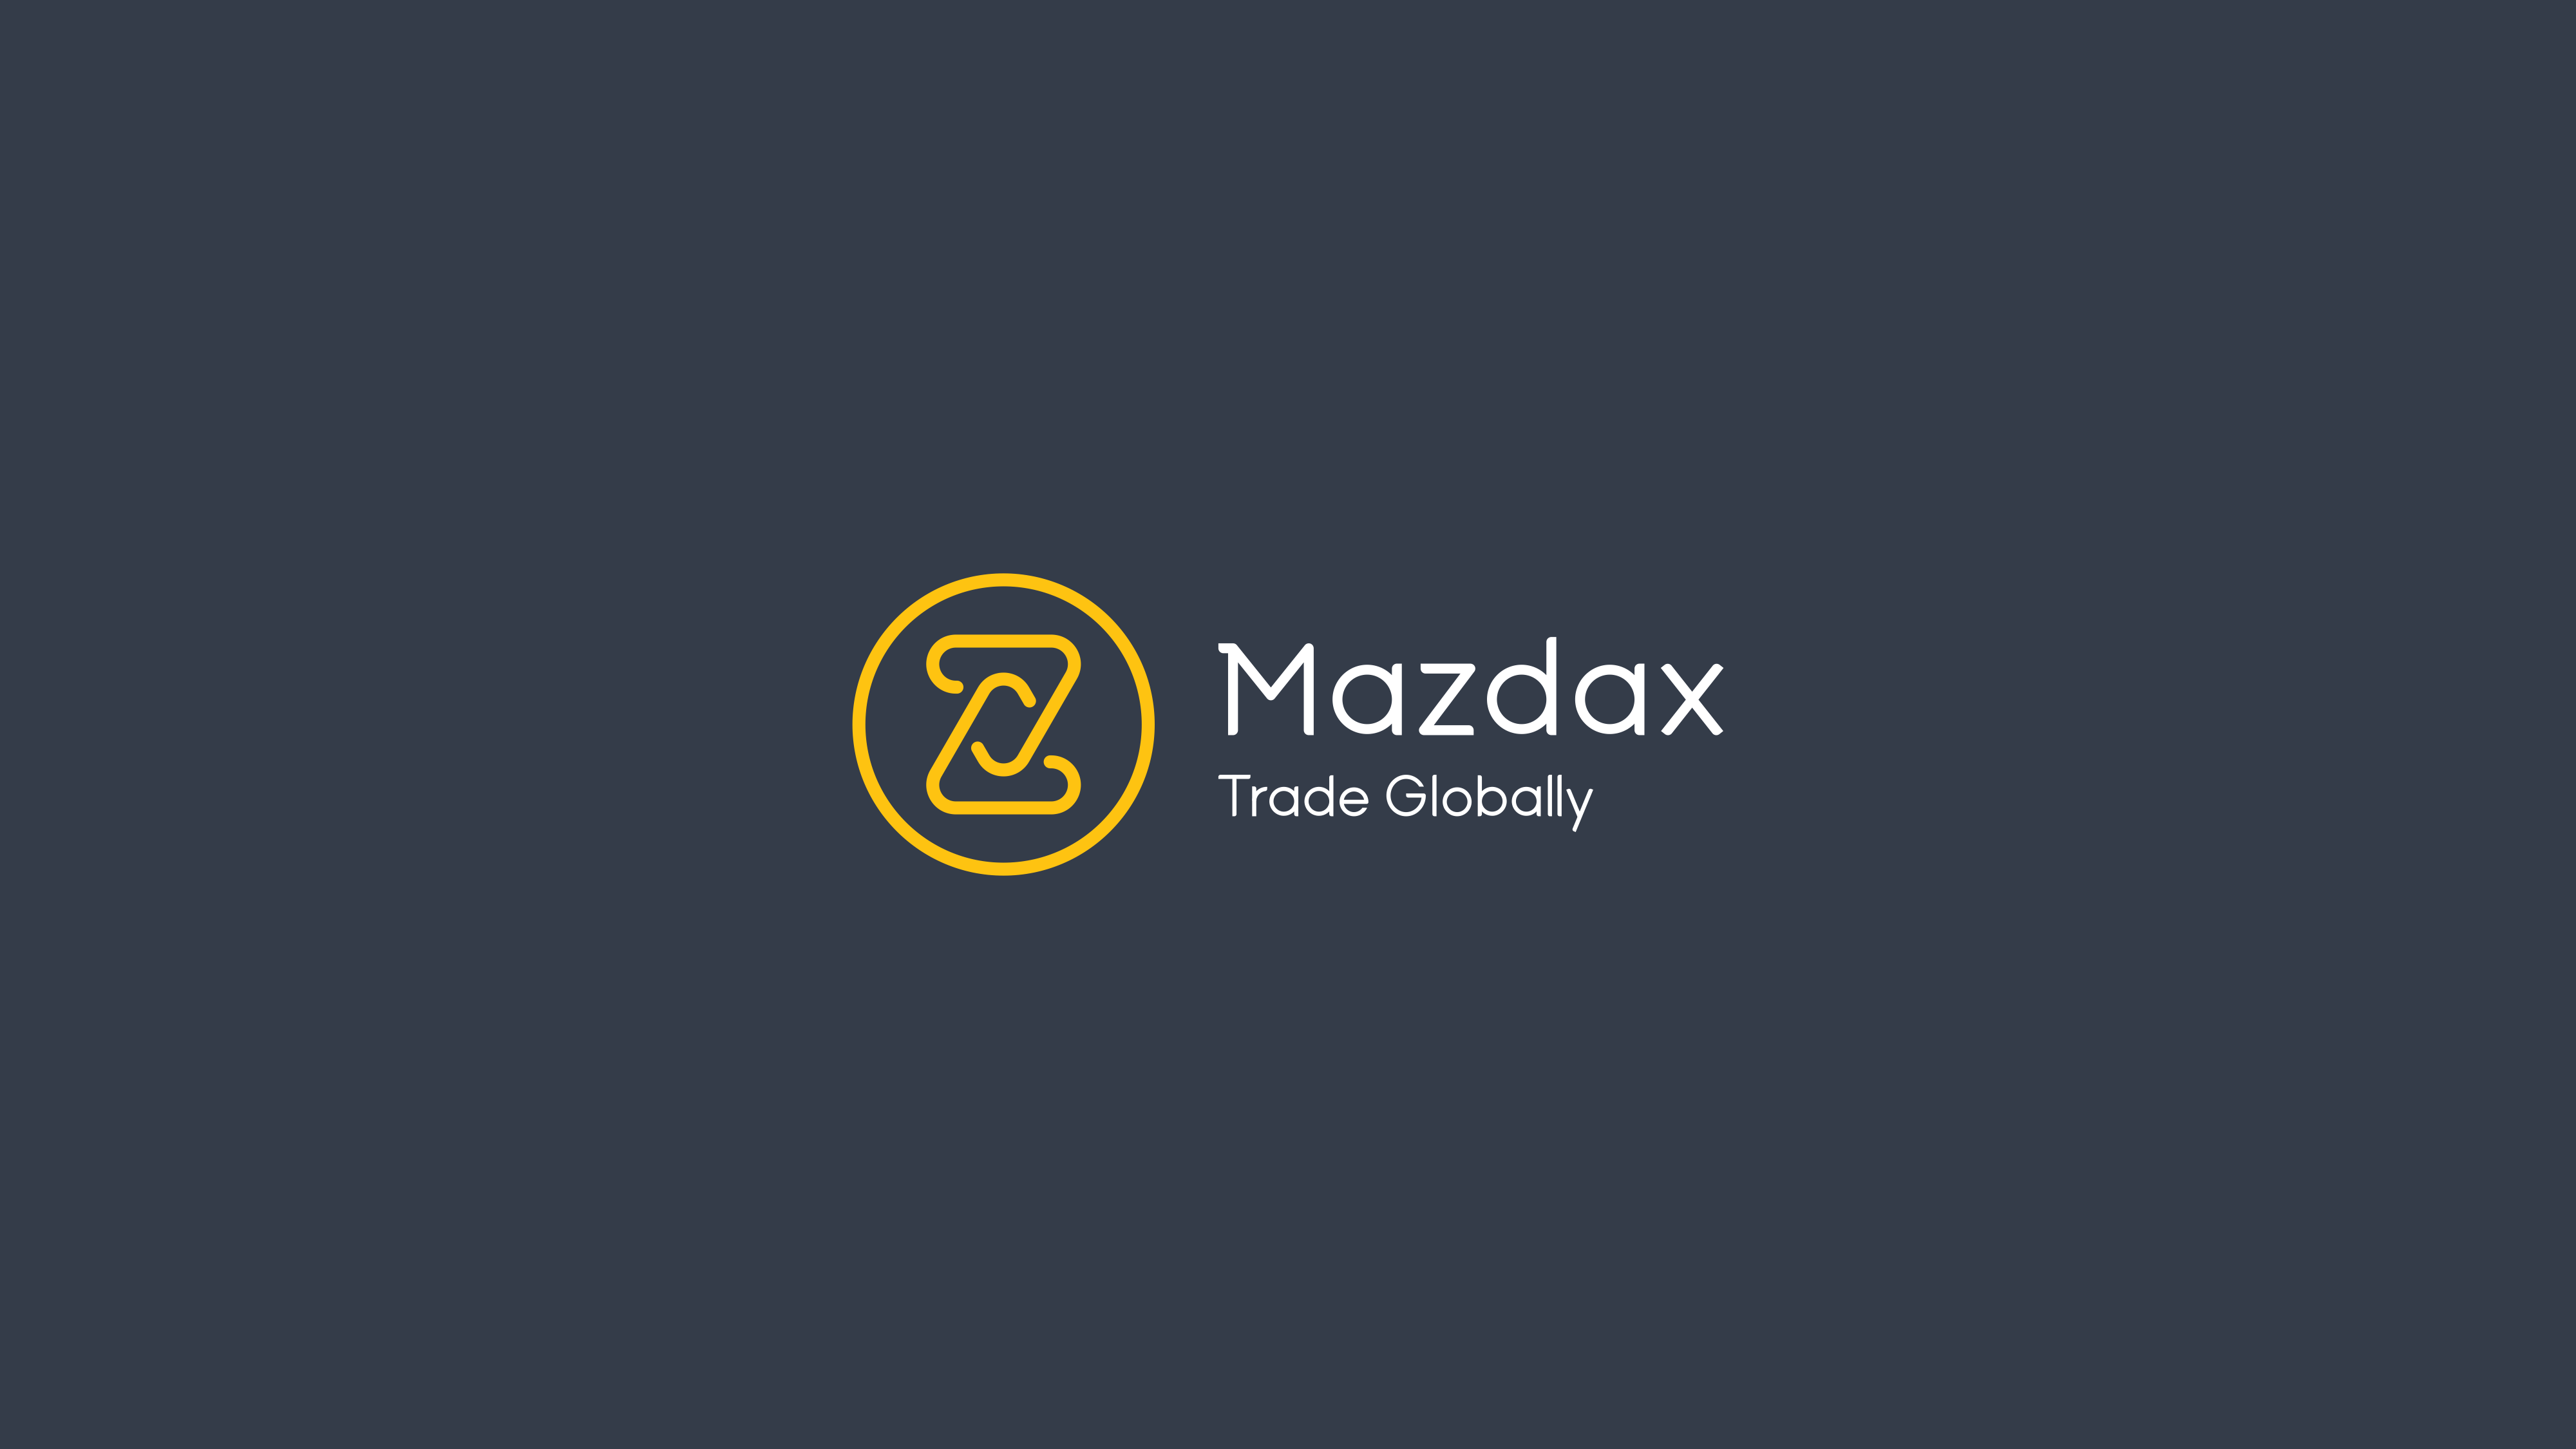 mazdax branding by zen brandiananding agency طراحی برند مزدکس